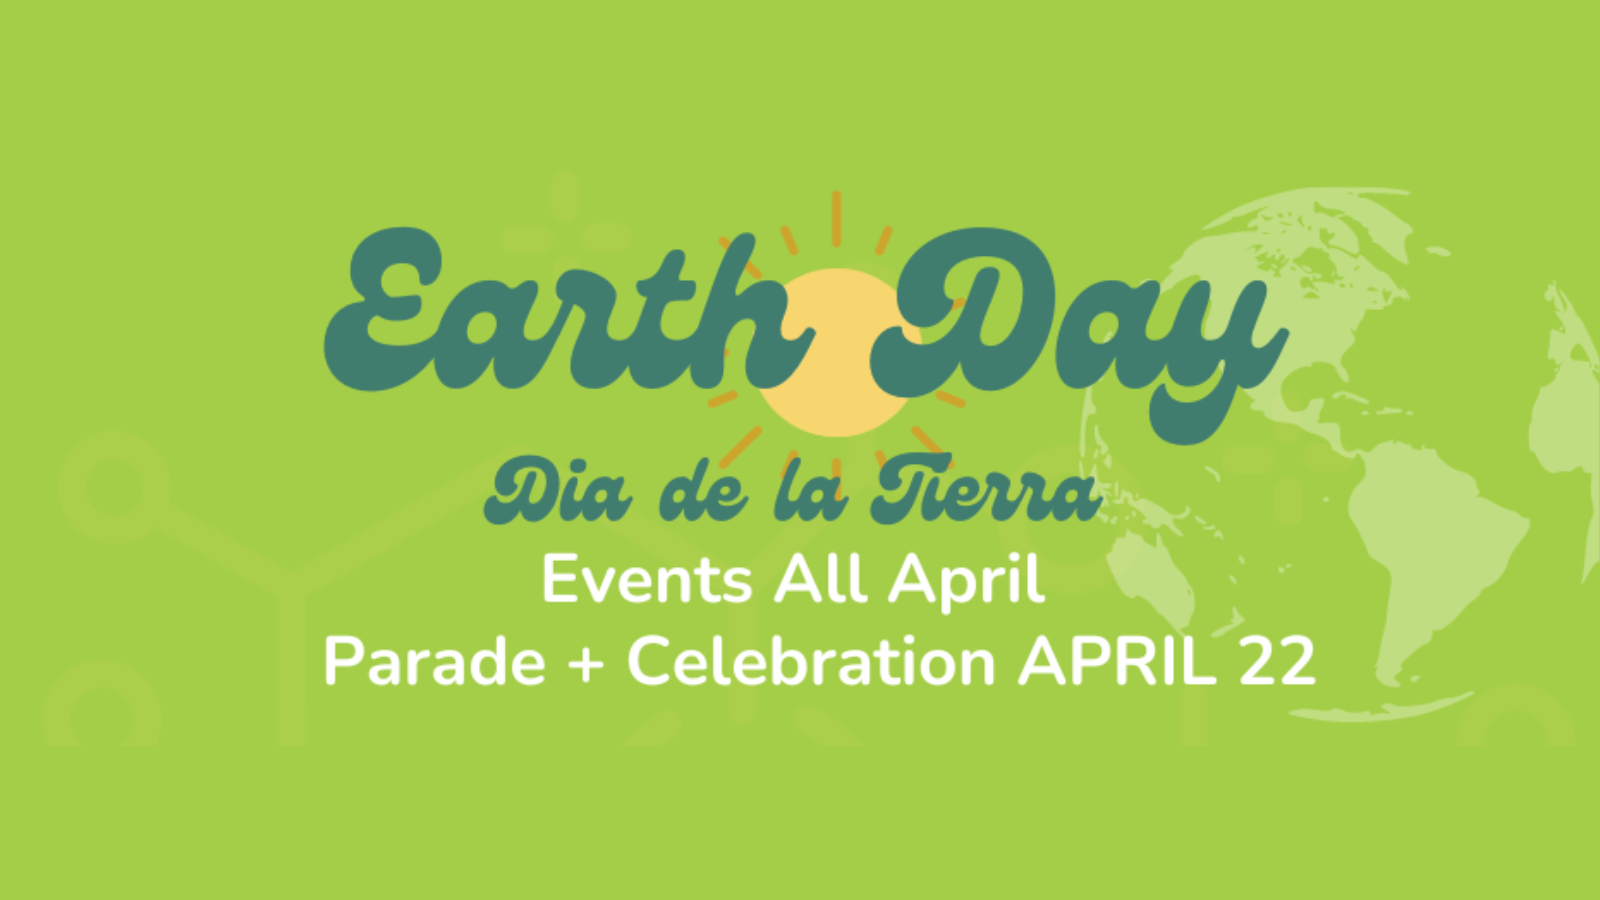 Text that reads: Earth Day, Dia de la Tierra, Events all April, Parade and Celebration April 22